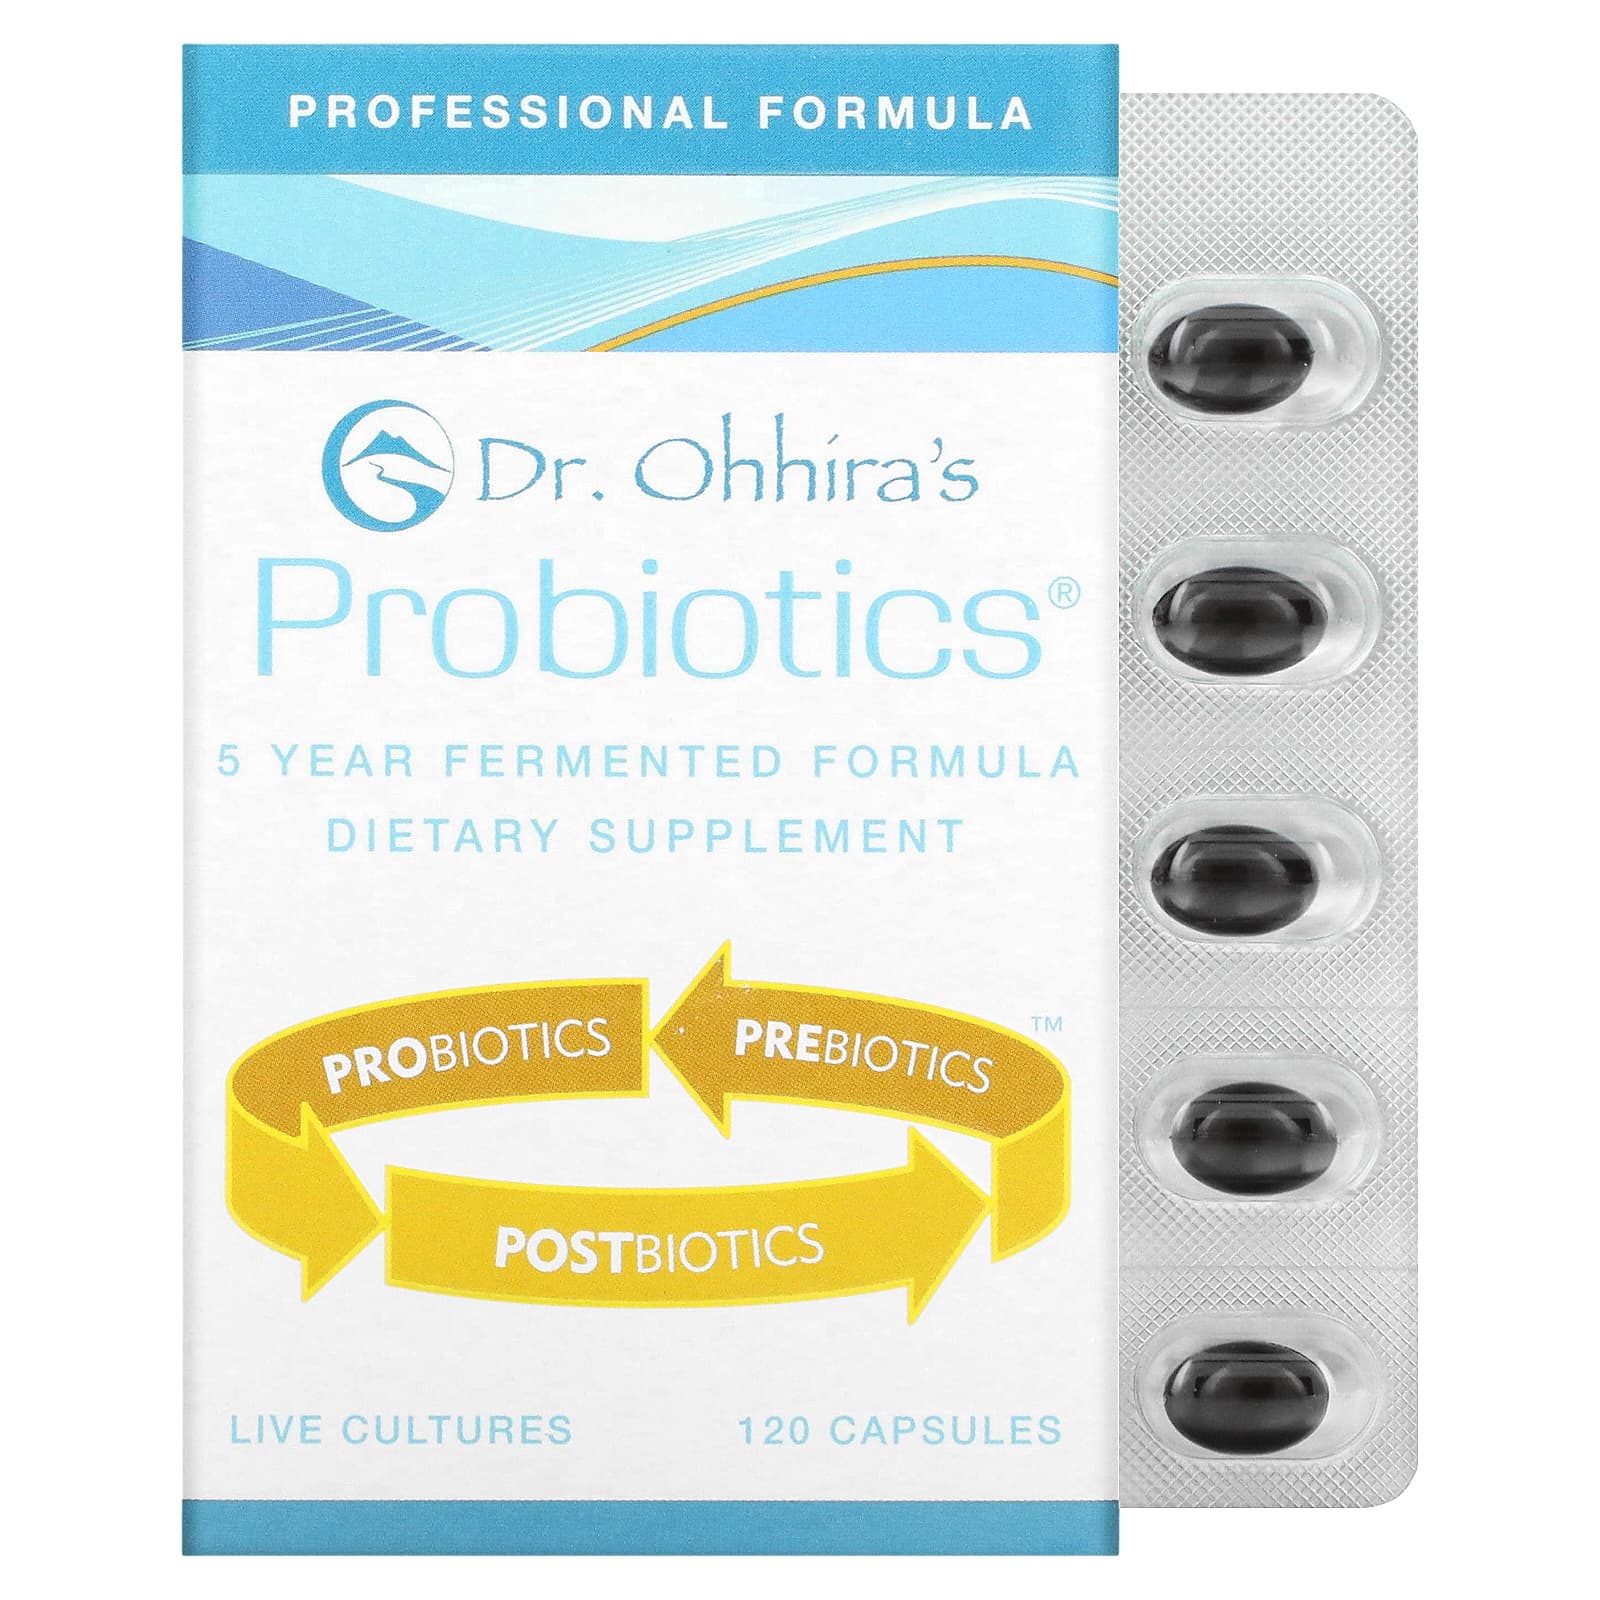 Dr. Ohhira's Essential Formulas Inc. Professional Formula Probiotics 120 капсул фото